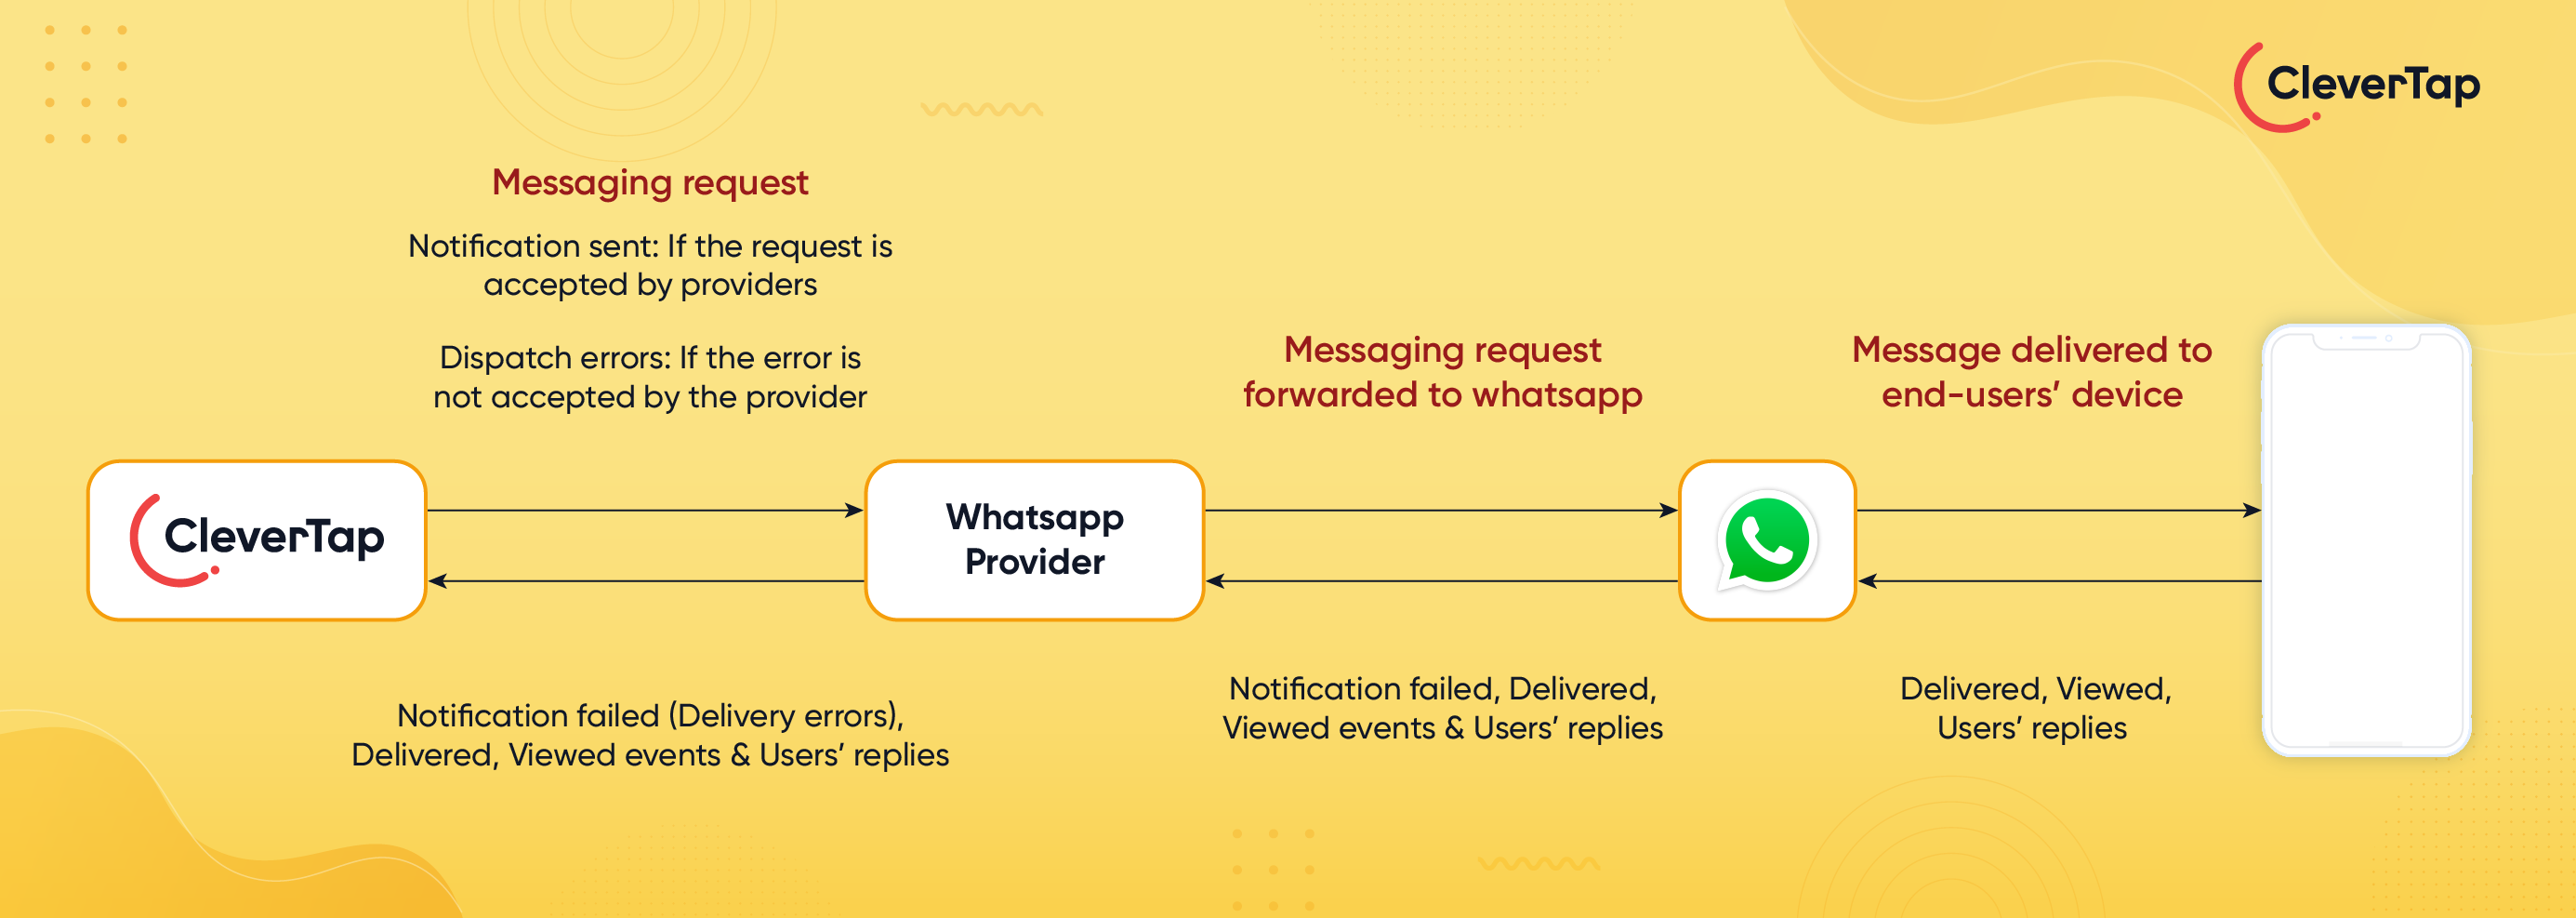 Whatsapp Display Flow